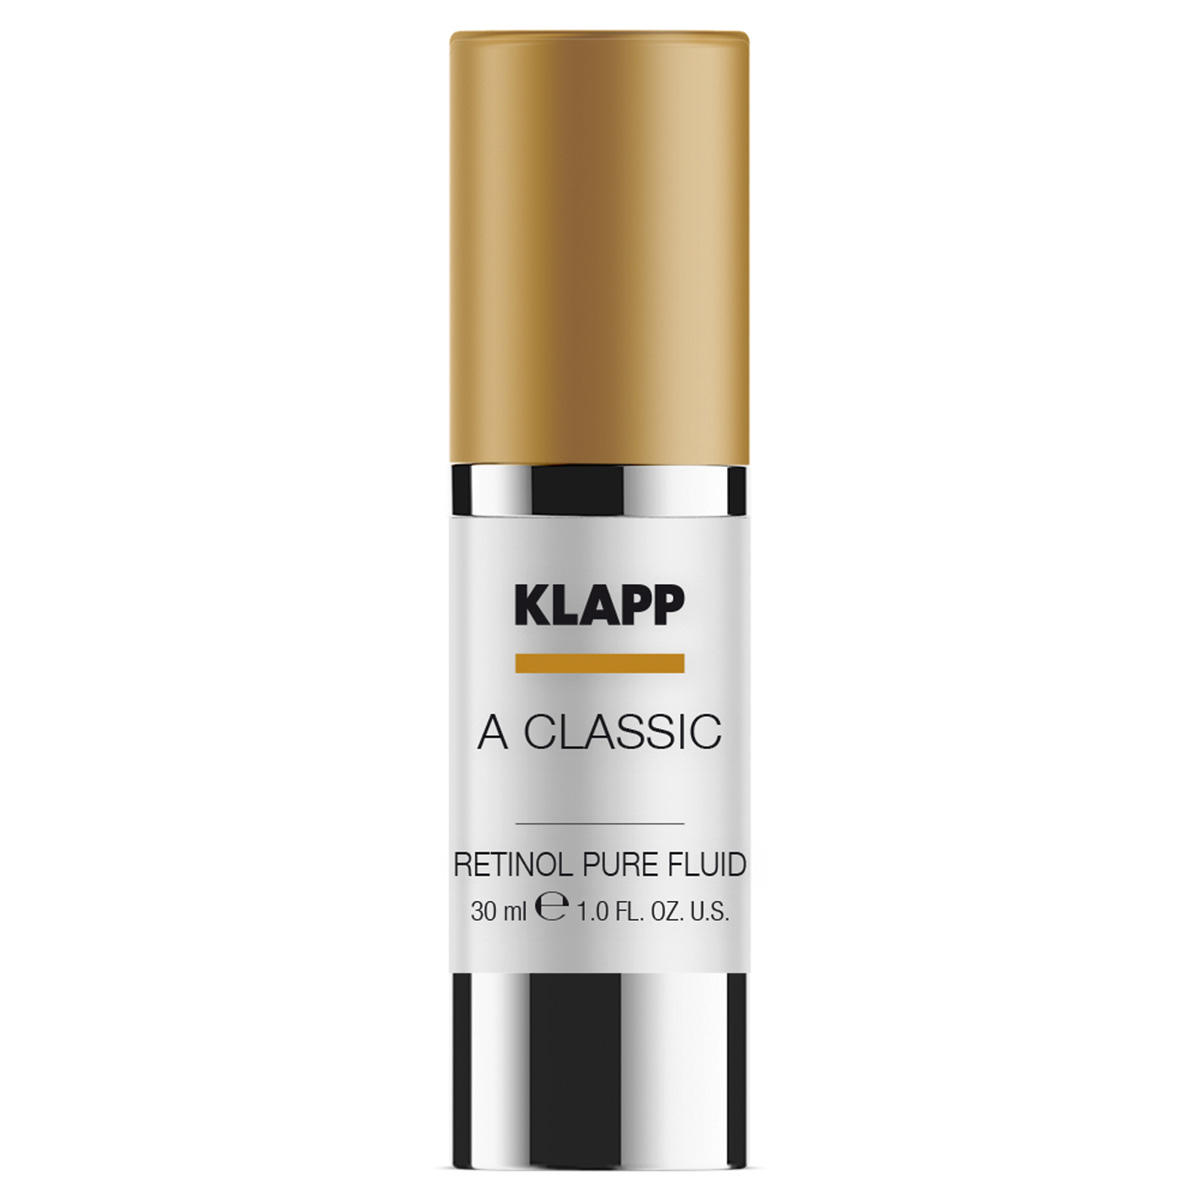 KLAPP A CLASSIC Retinol Pure Fluid 30 ml - 1